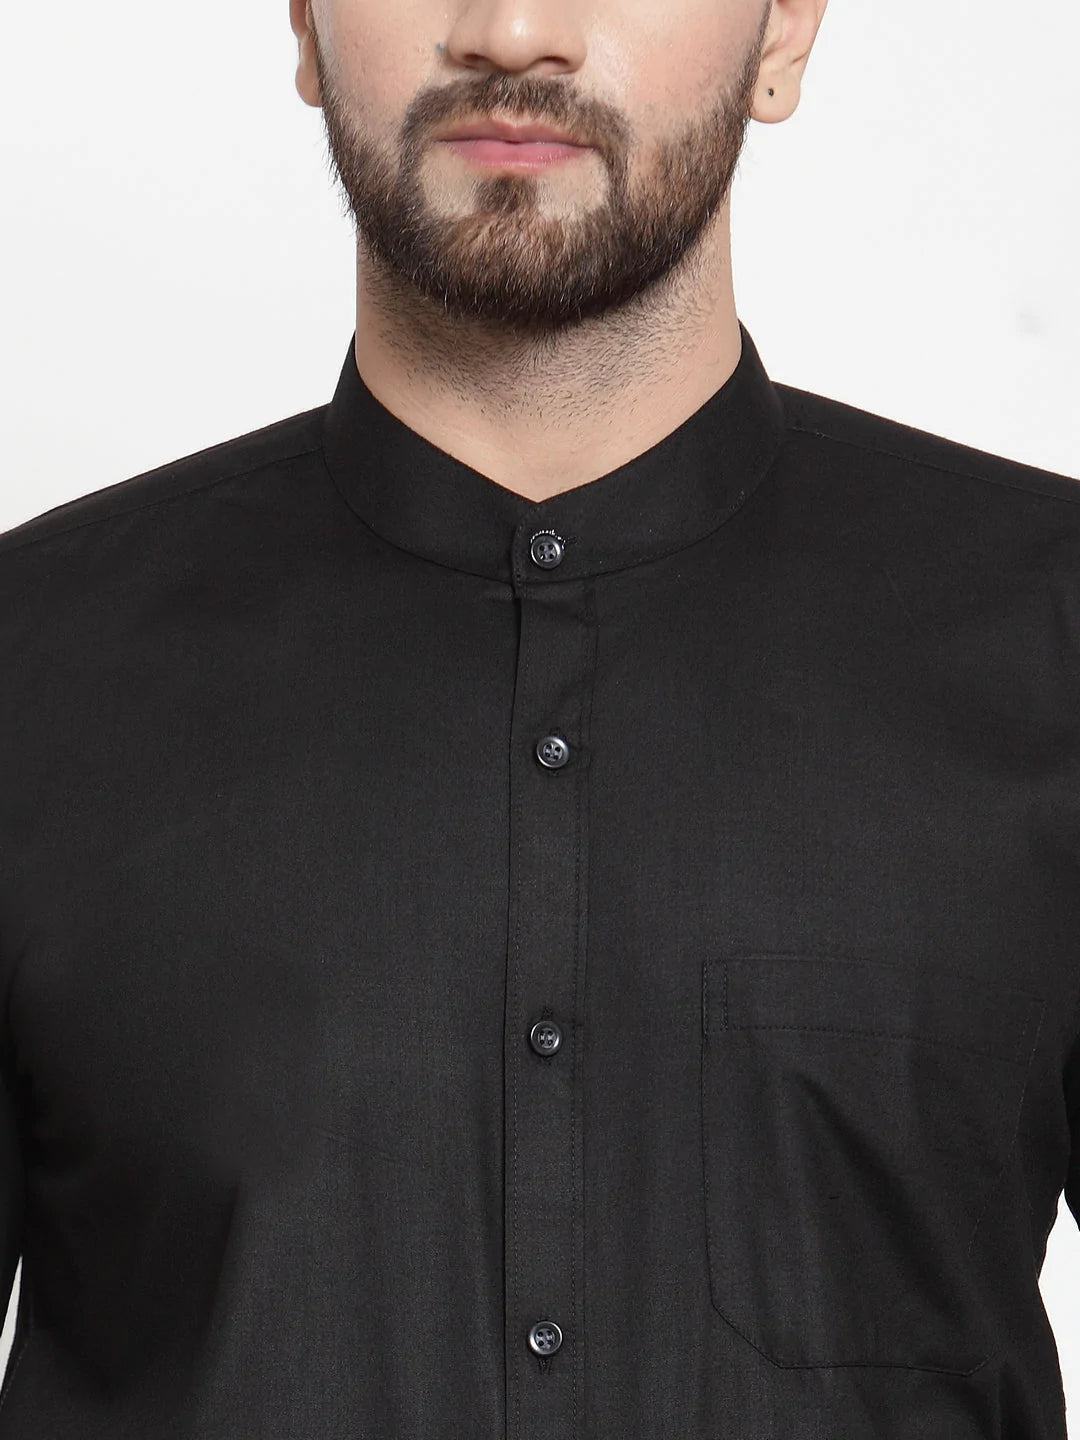 Jainish Black Men's Cotton Solid Mandarin Collar Formal Shirts ( SF 726Black )